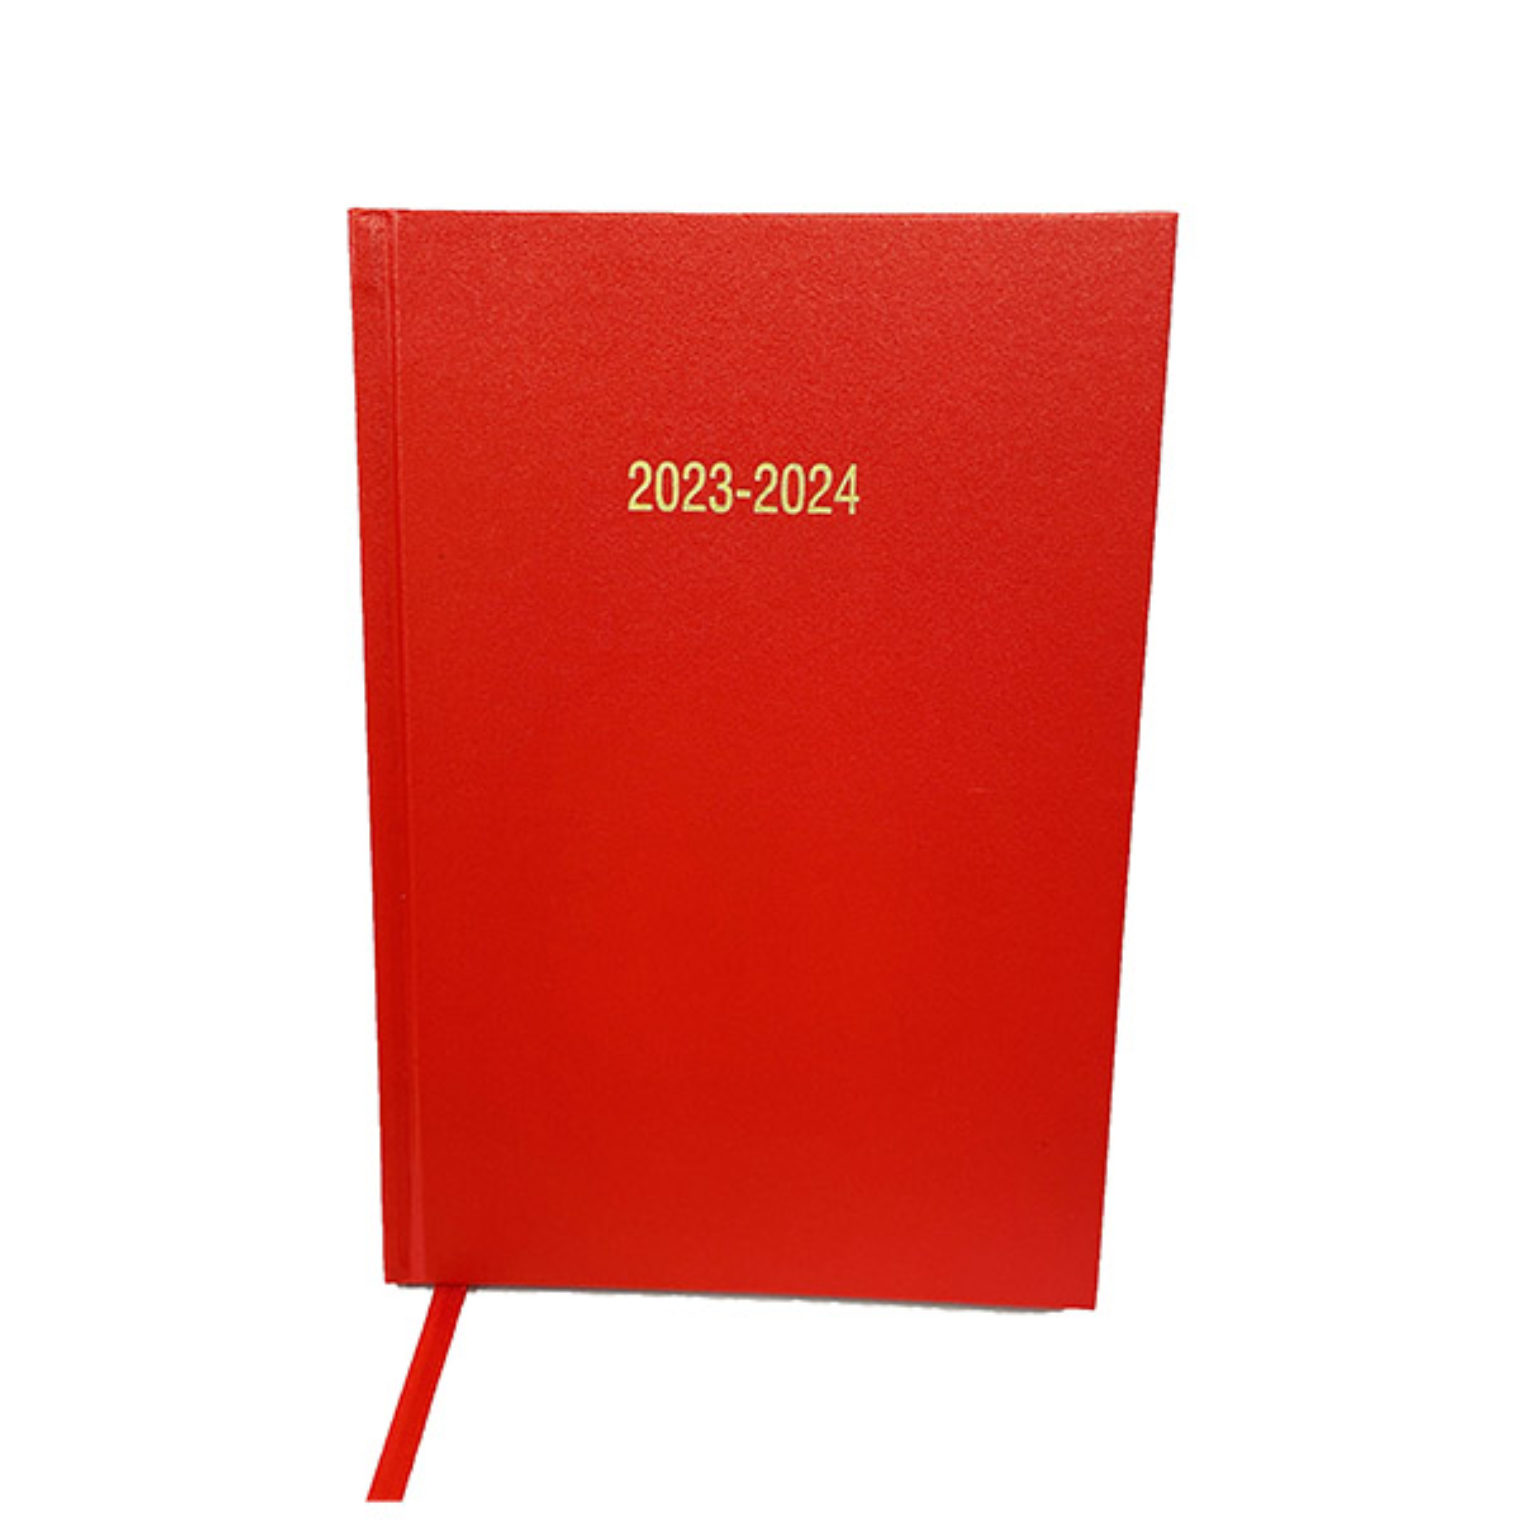 2023/24 Academic Diaries - Red